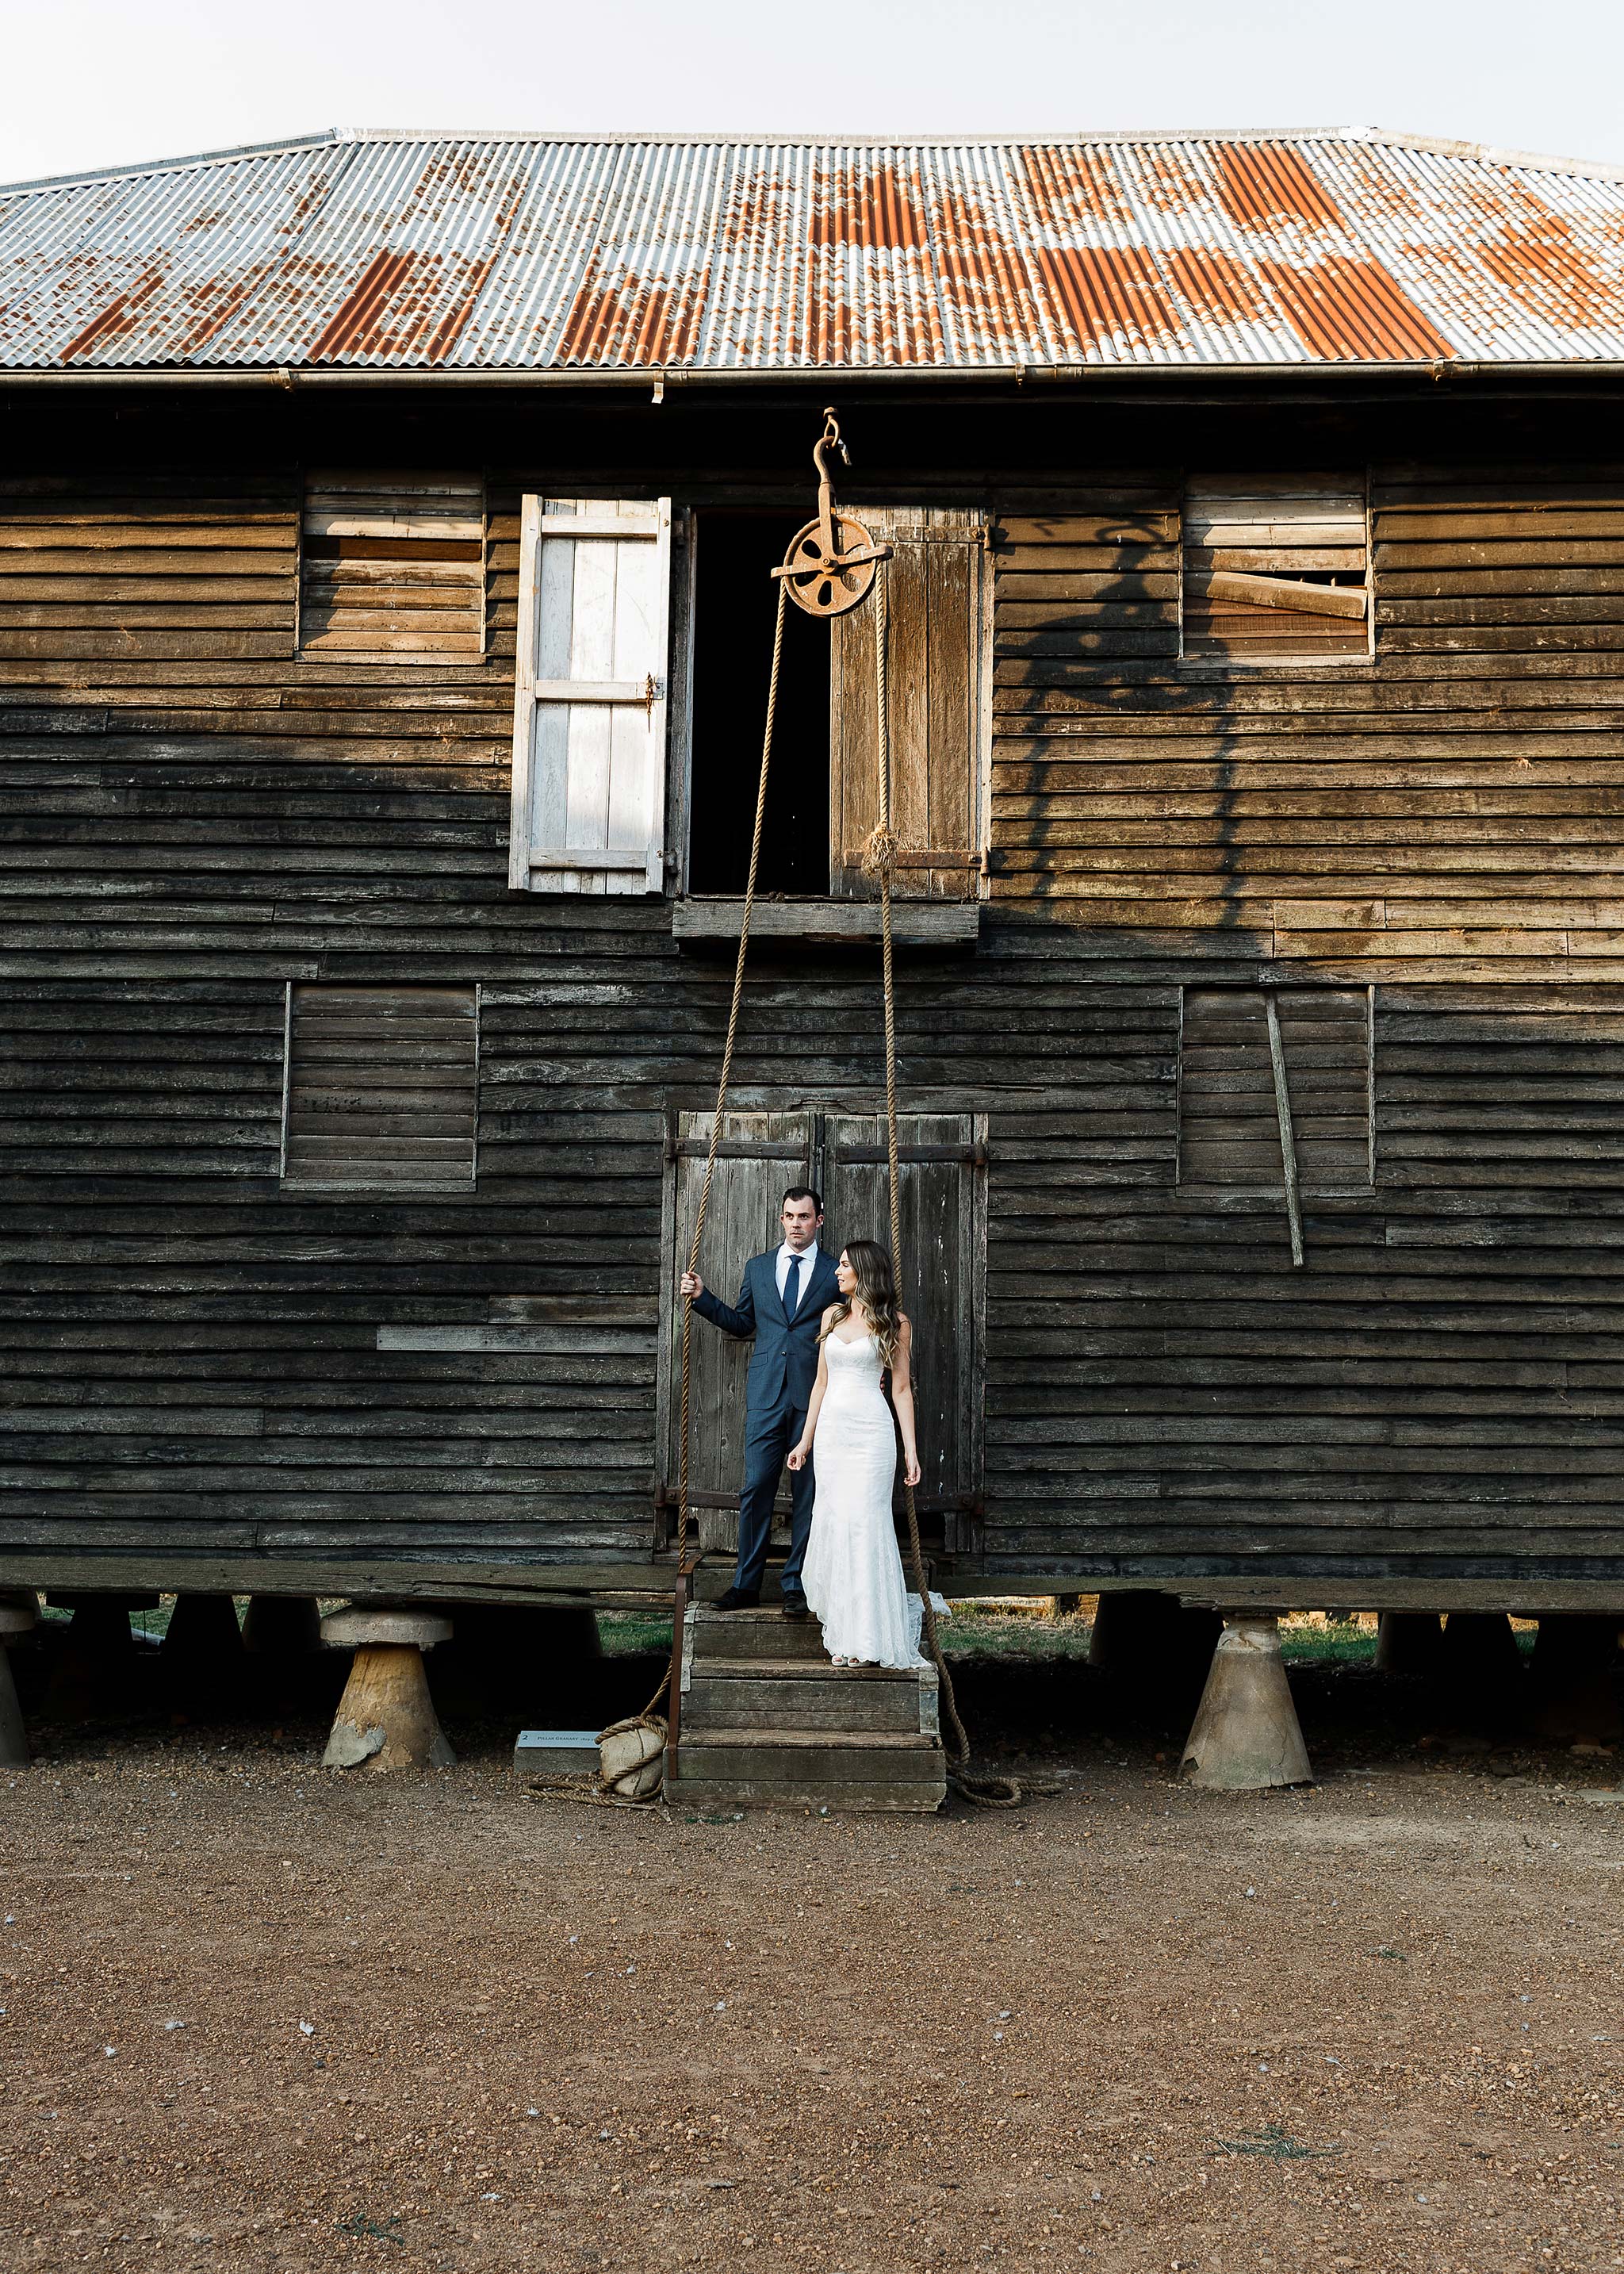 Launceston-Brickendon-barn-Wedding-Photographer-bride-groom-portrait